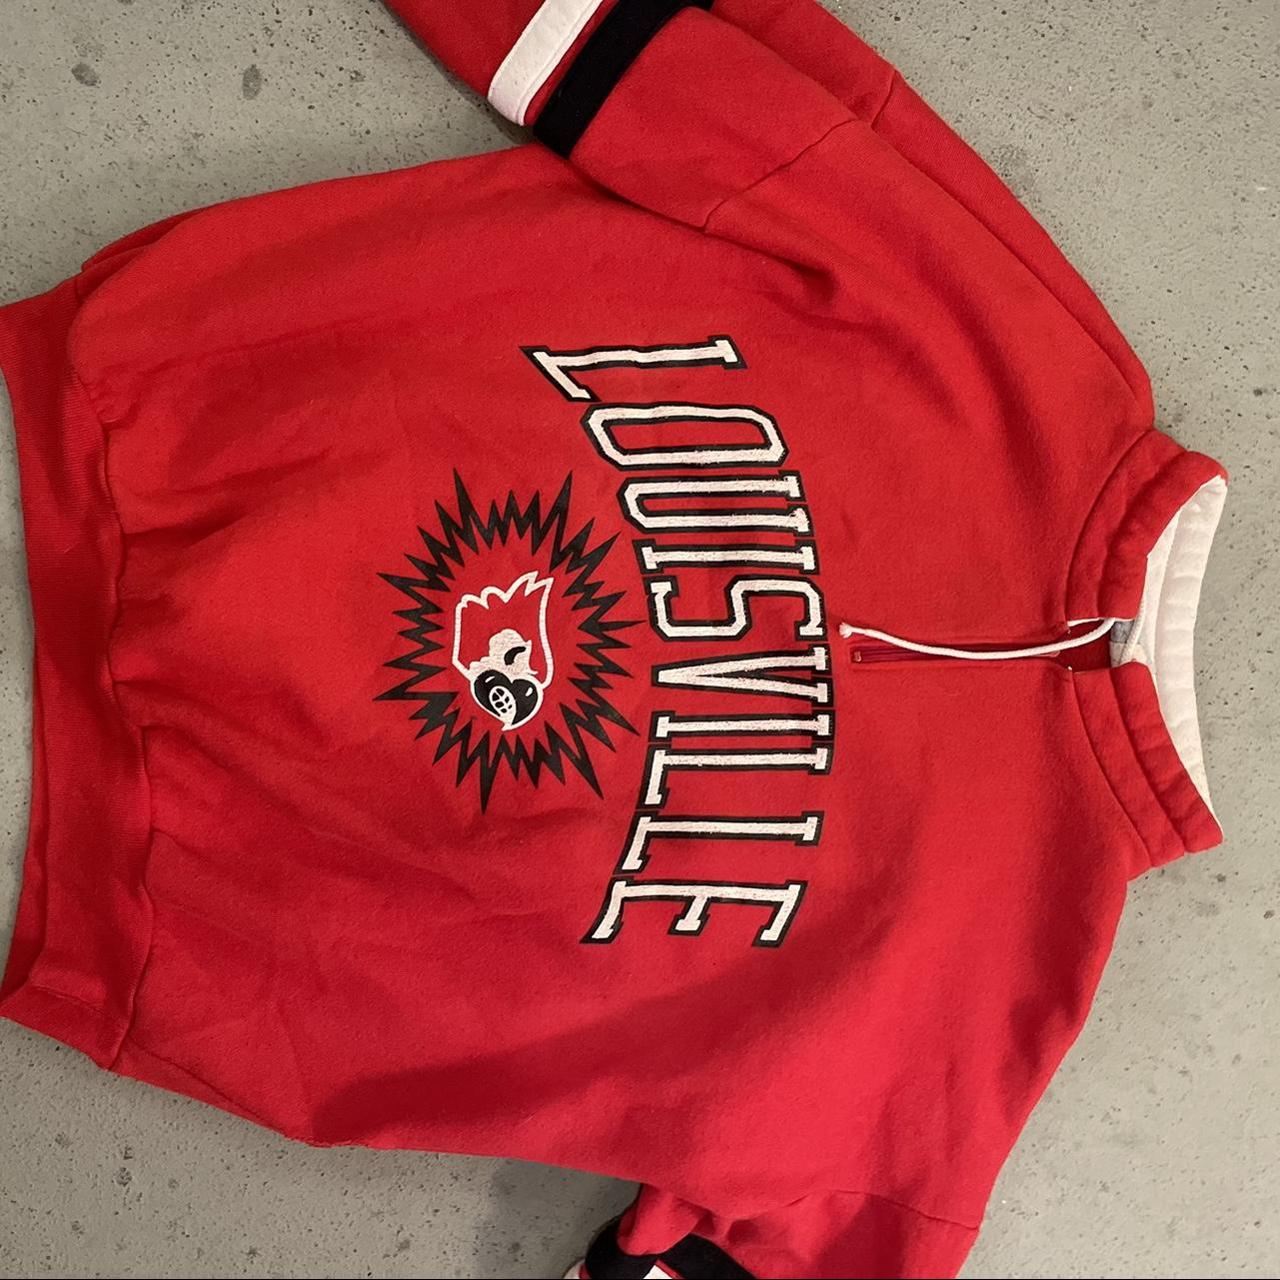 louisville cardinals Vintage Sweatshirt Style 